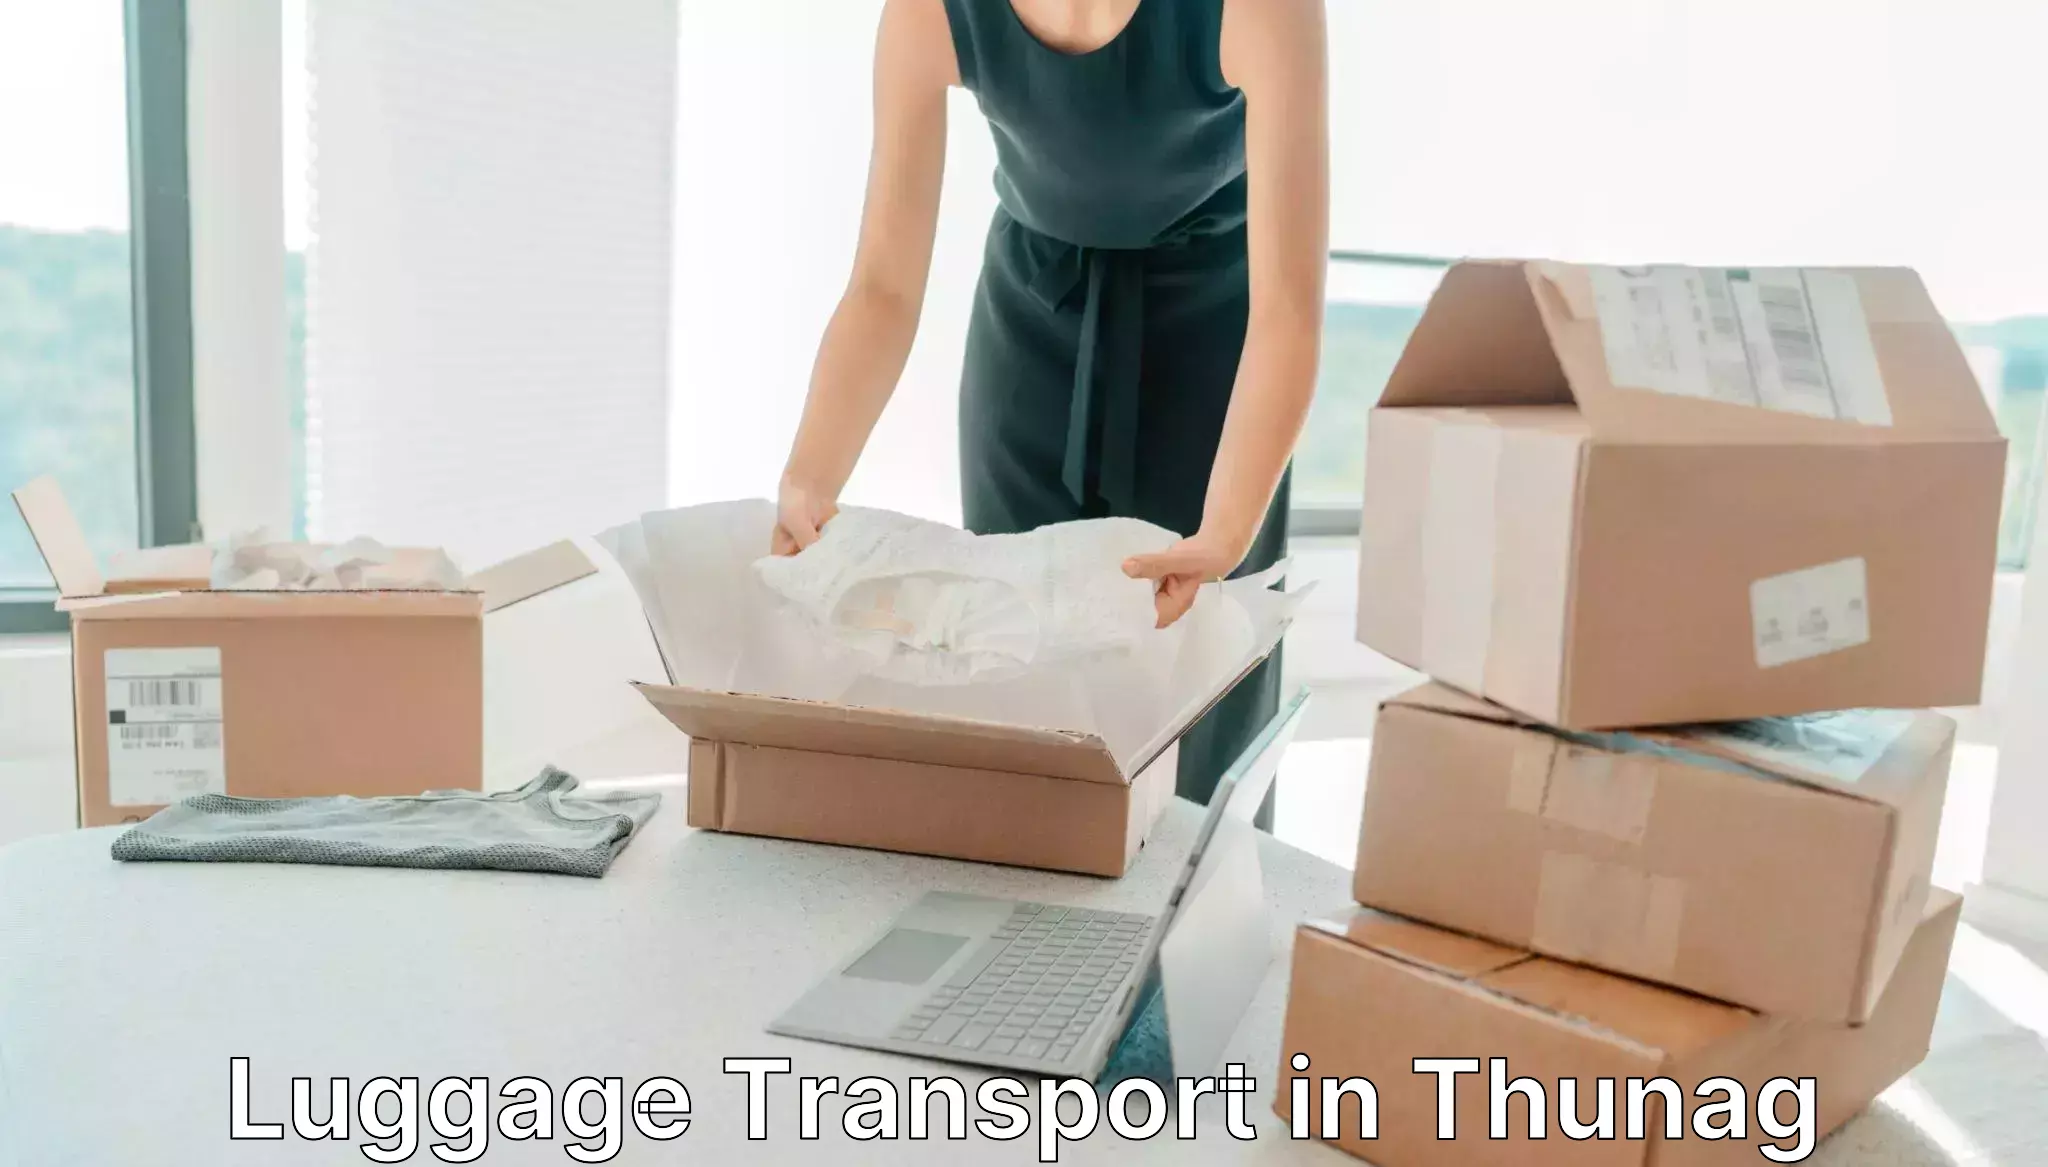 Same day baggage transport in Thunag